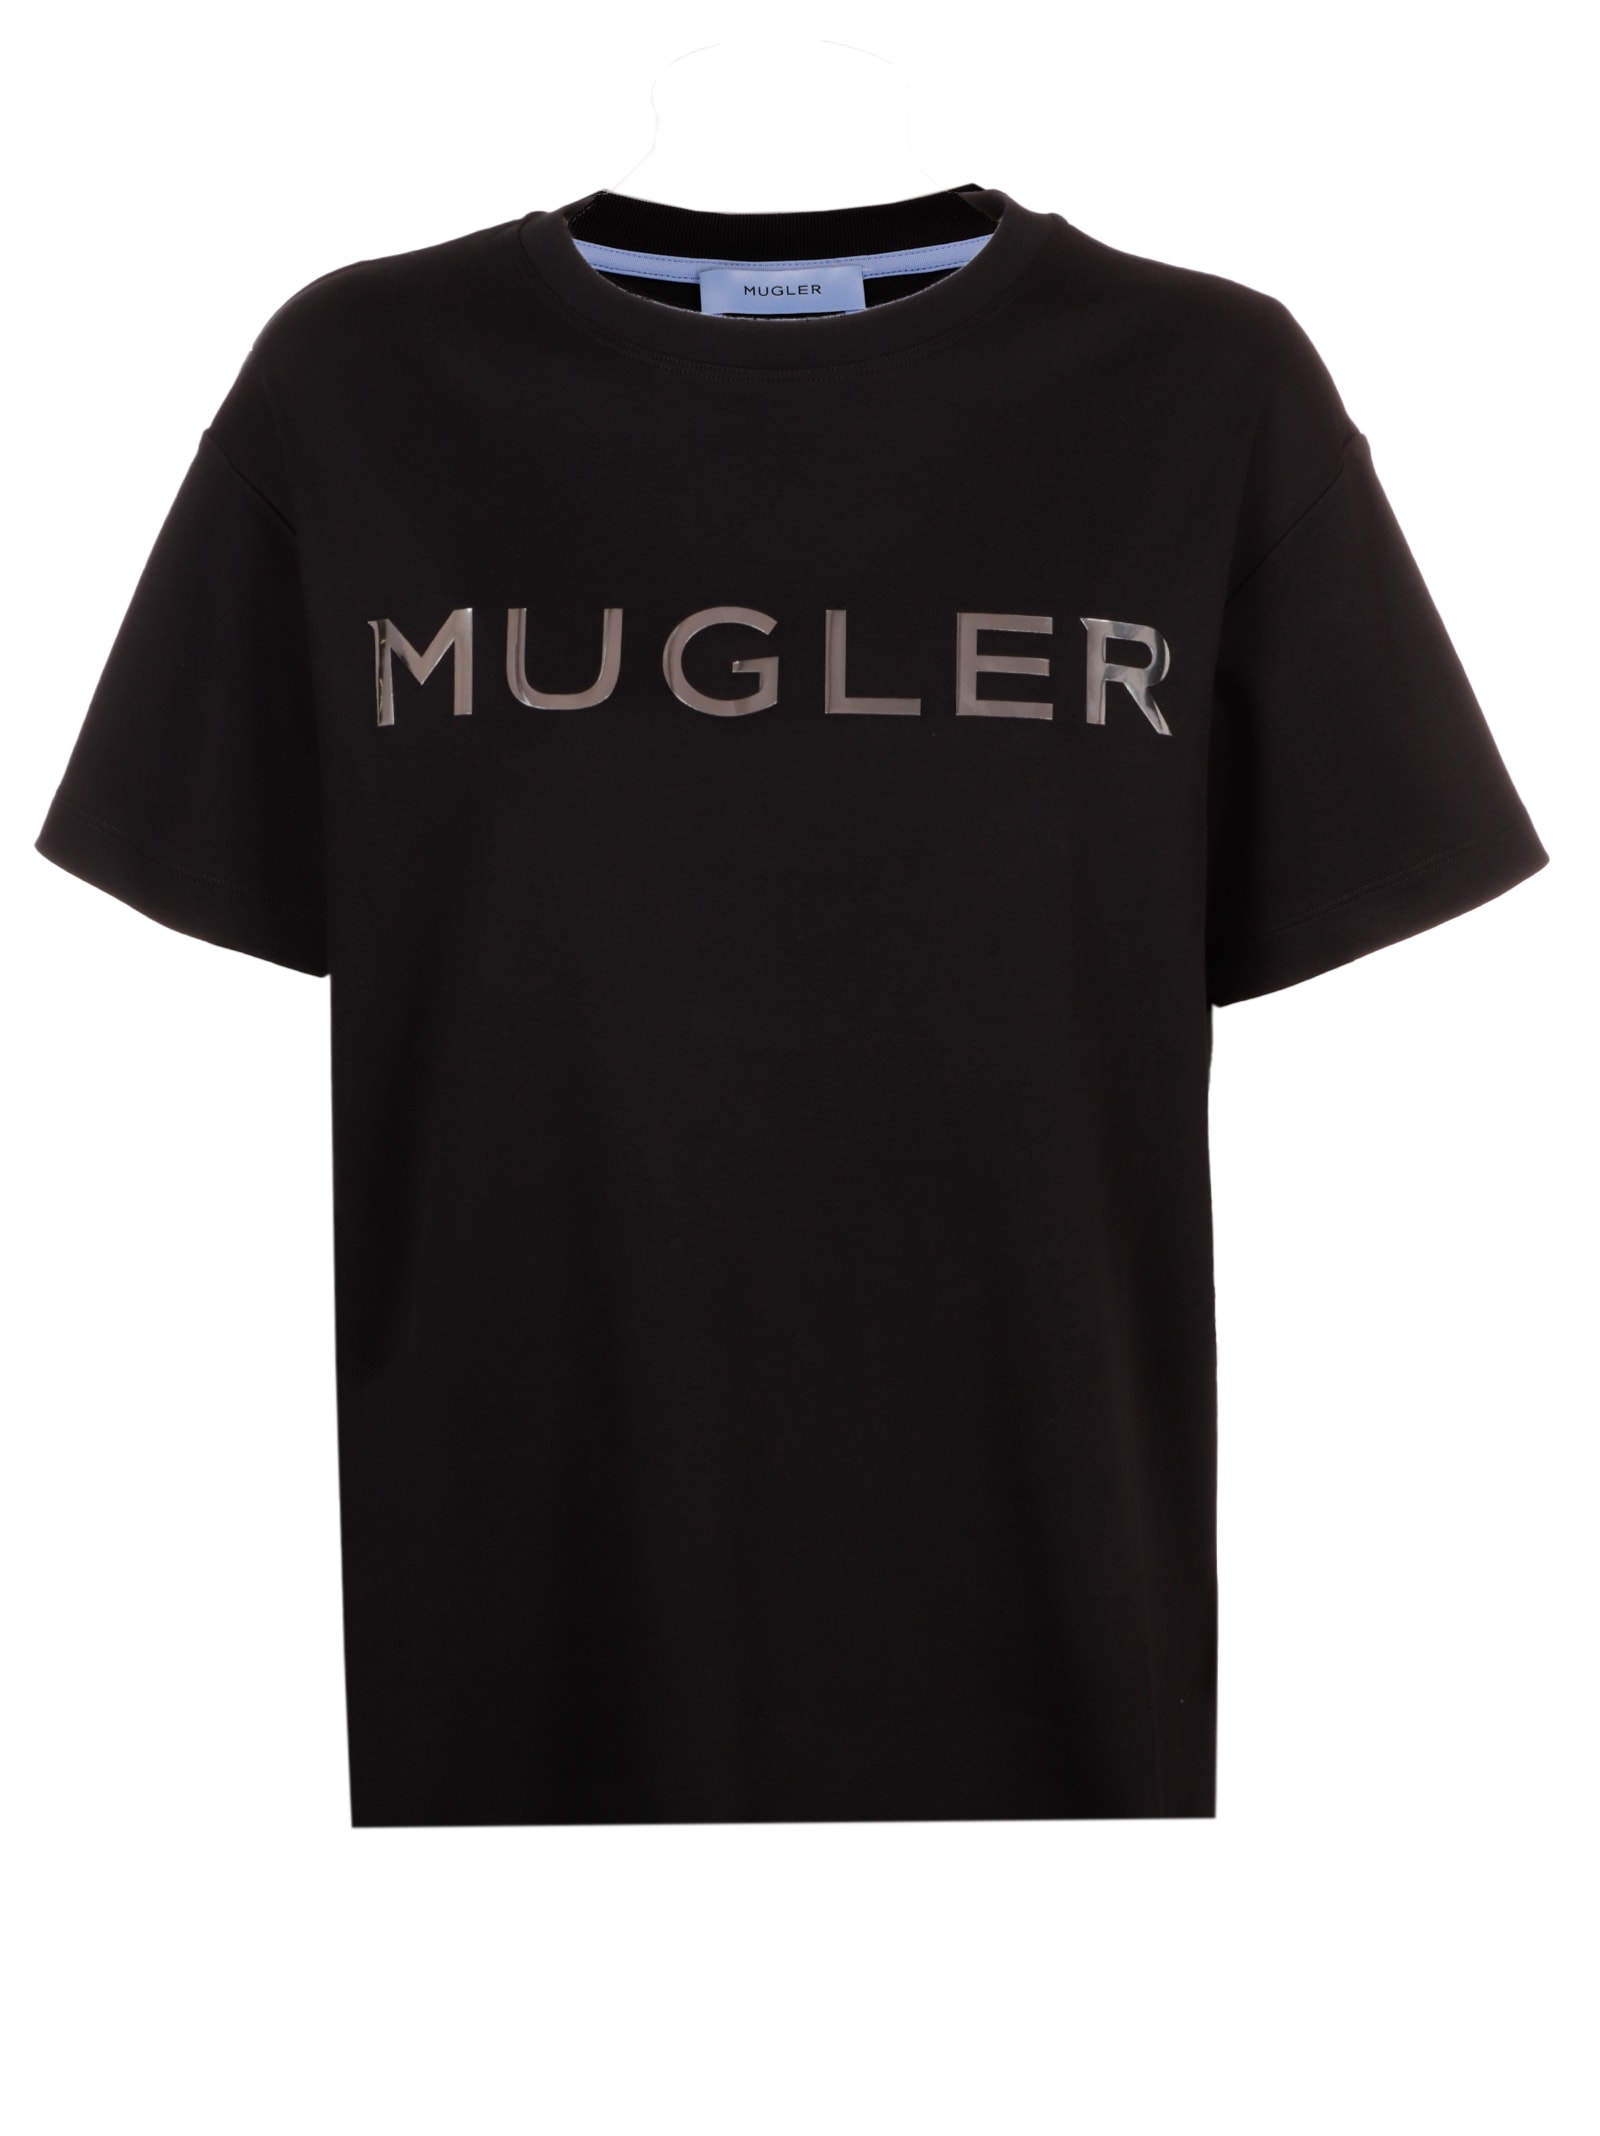 Mugler Tshirt